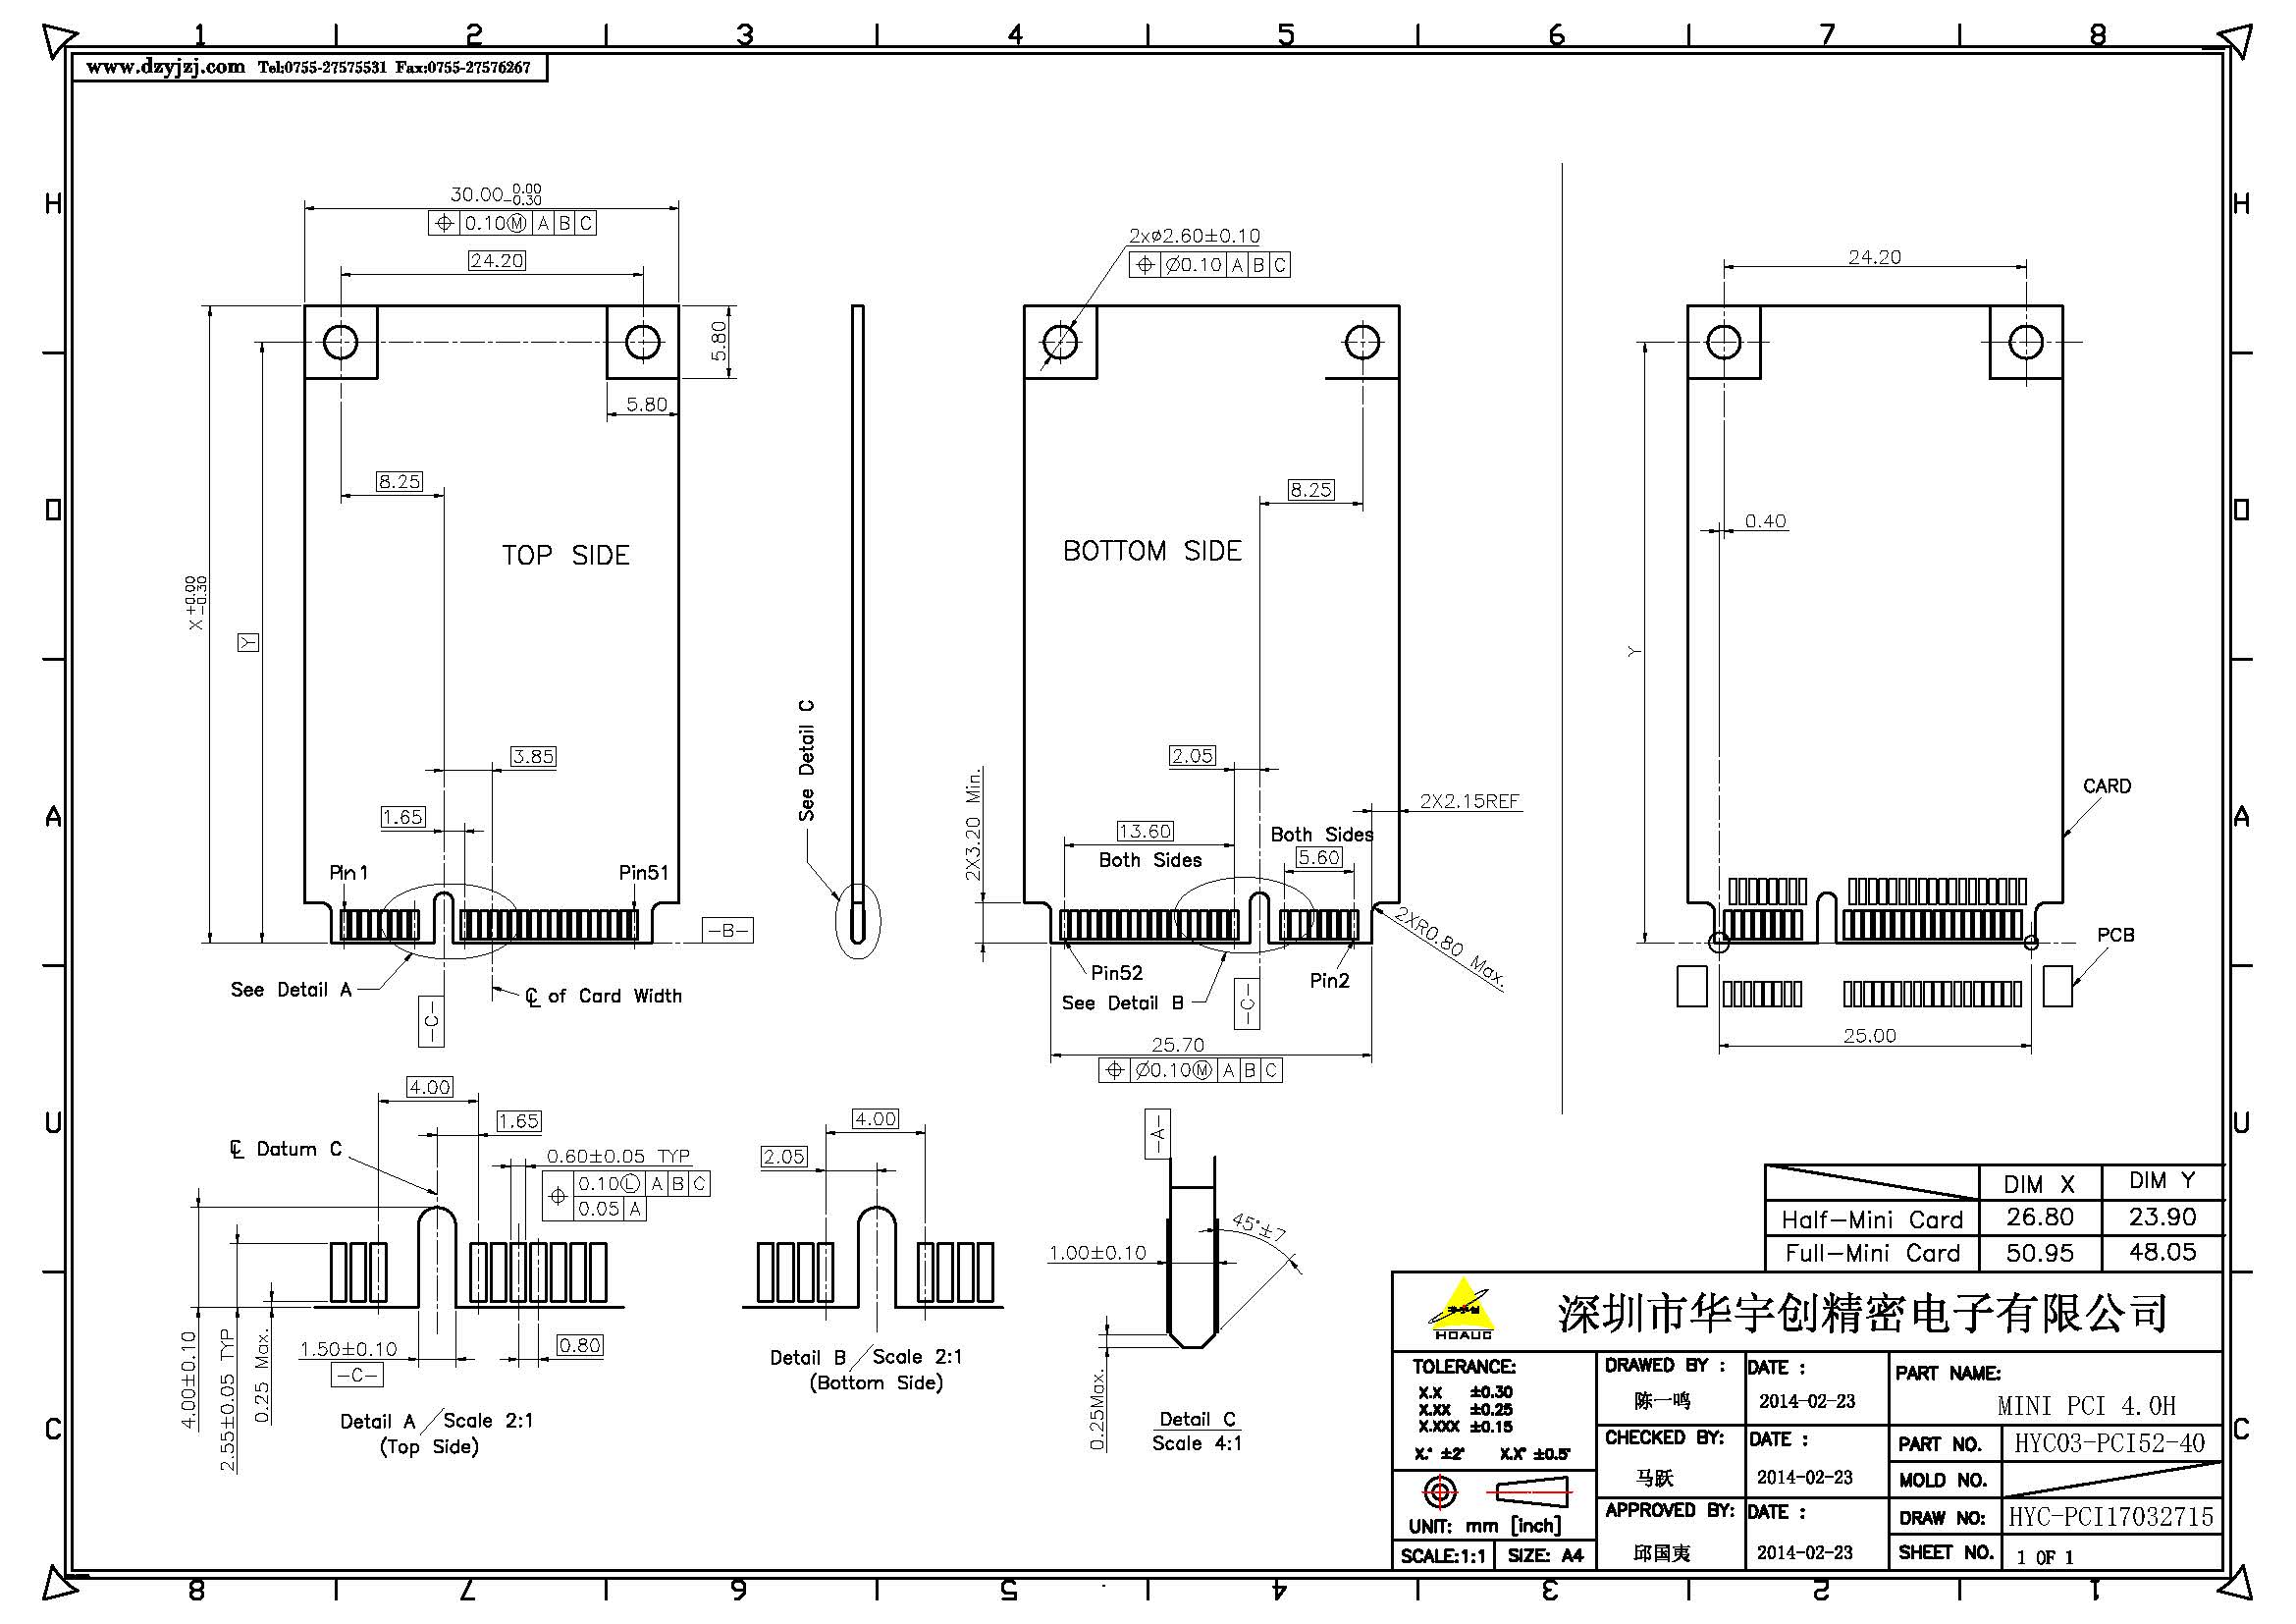 MINI PCI 4.0H产品图_页面_3.jpg